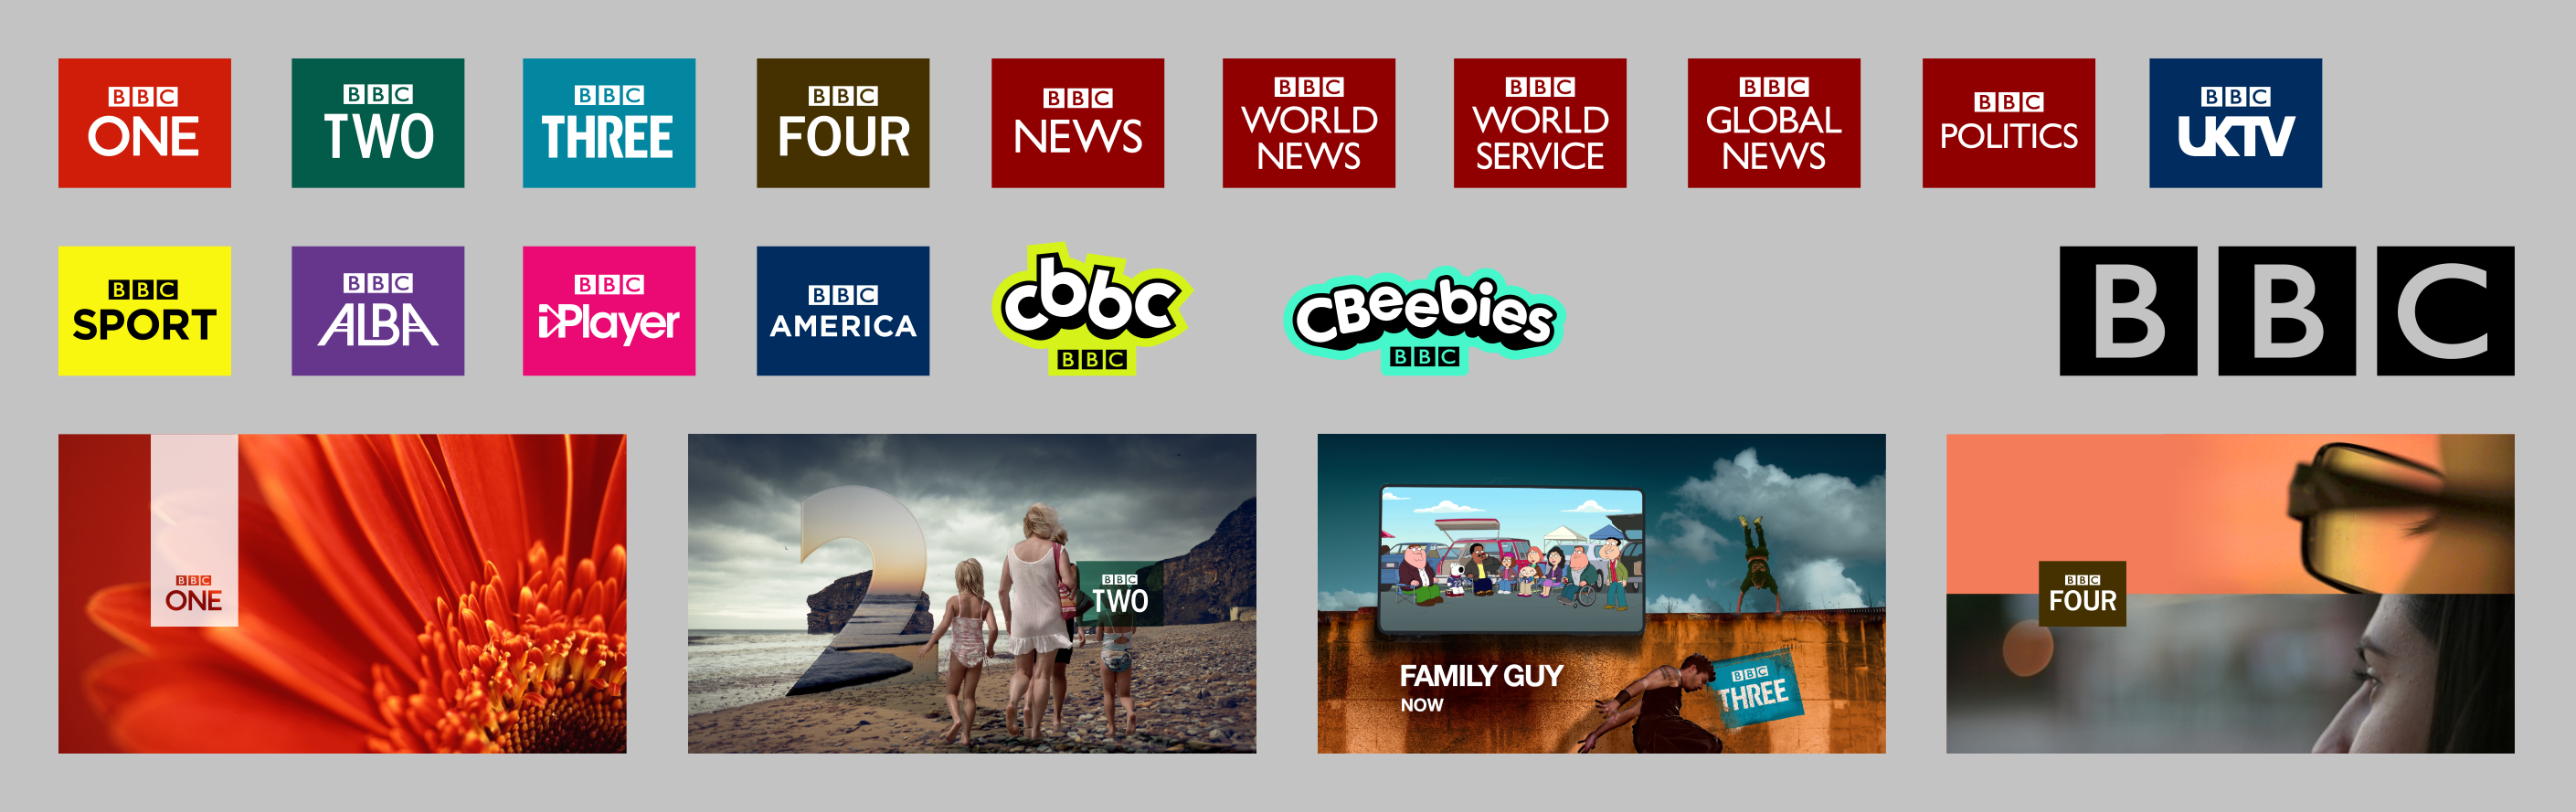 Bbc co uk. Bbc News логотип. Bbc CBEEBIES логотип. Bbc 3 logo. Каталог bbc.